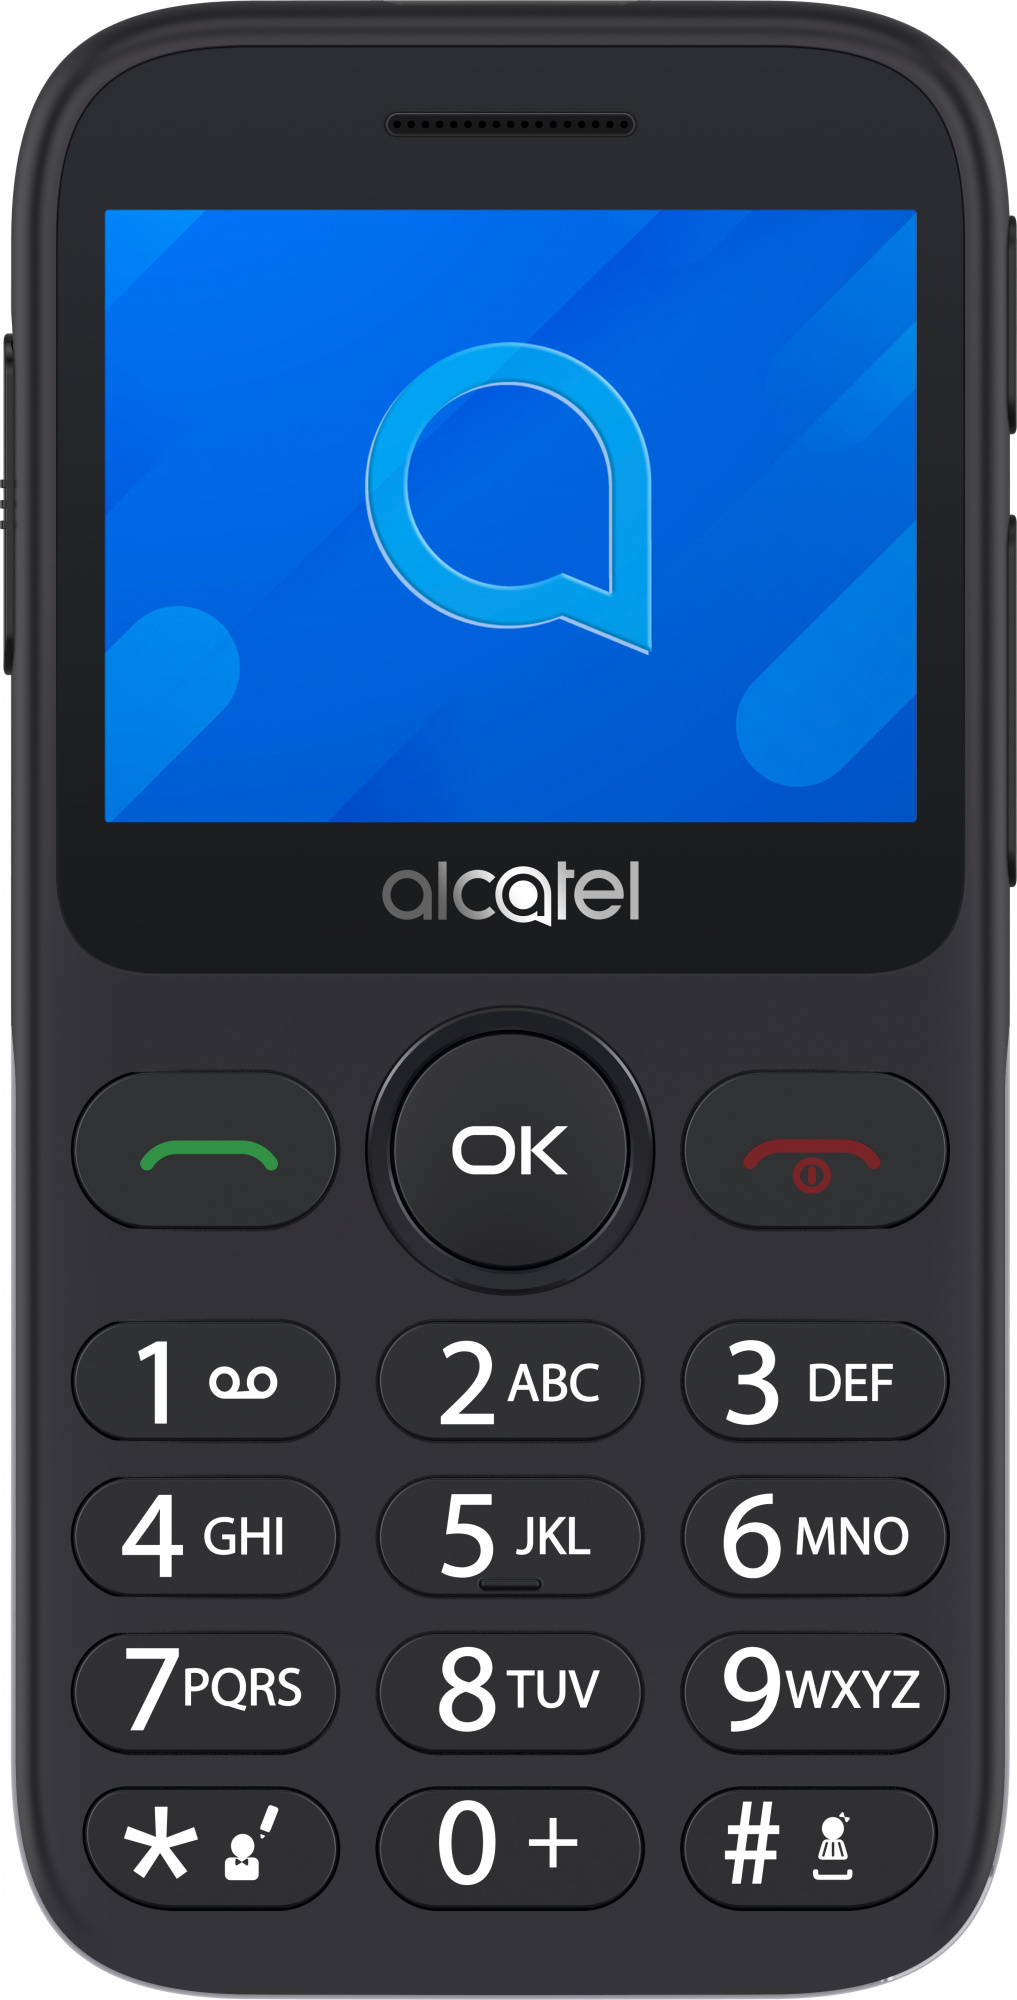 Мобильный телефон Alcatel 2020X серебристый моноблок 1Sim 2.4" 240x320 Thread-X 2Mpix GSM900/1800 GSM1900 FM microSD max32Gb